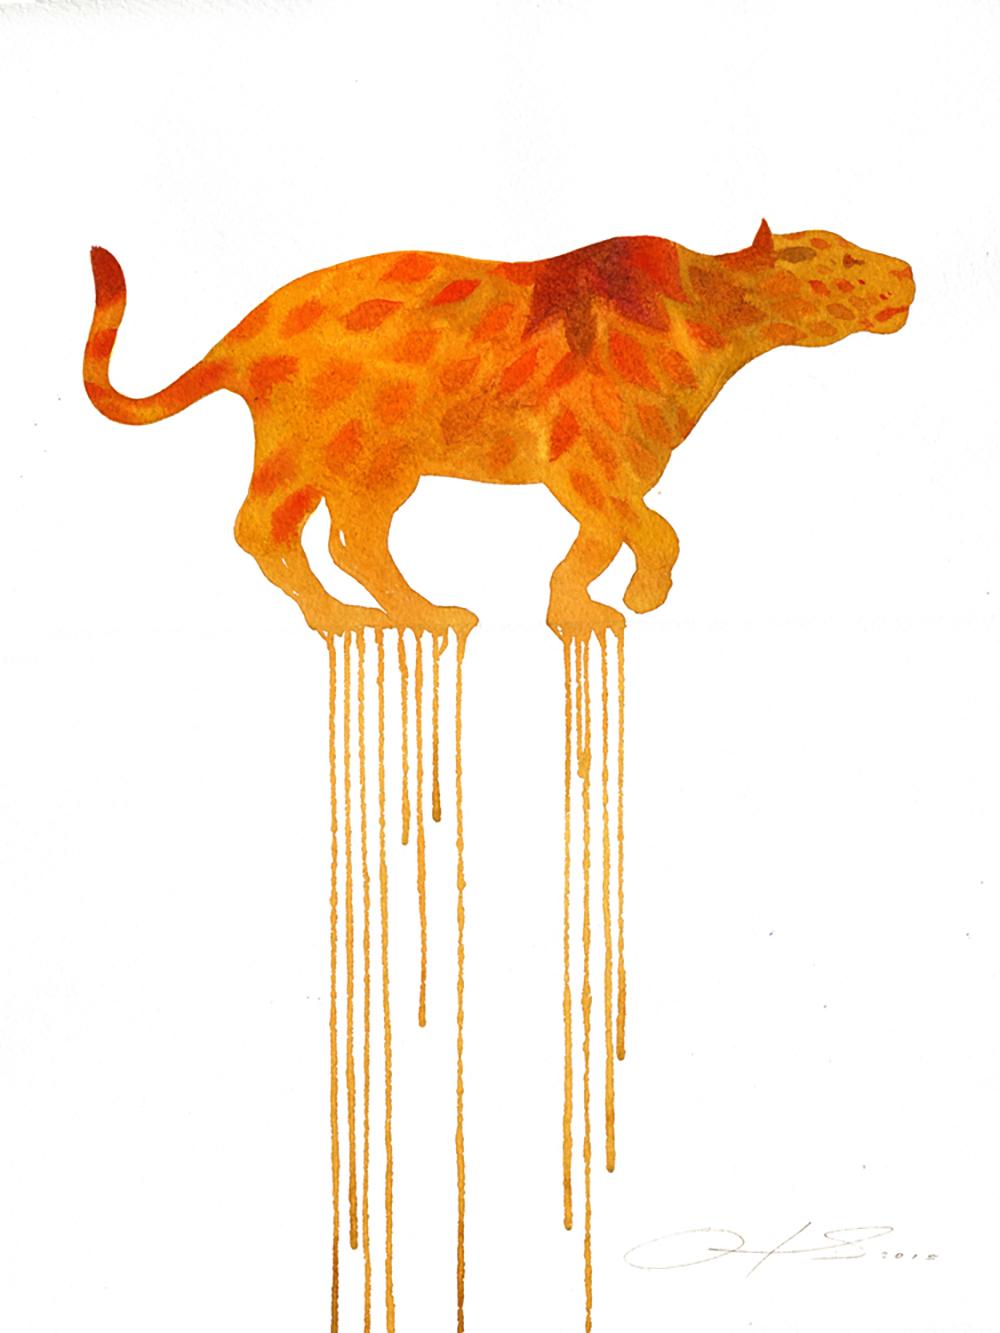 Oliver Flores Animal Art - "Blooming Jaguar", watercolor & pencil illustration on watercolor paper